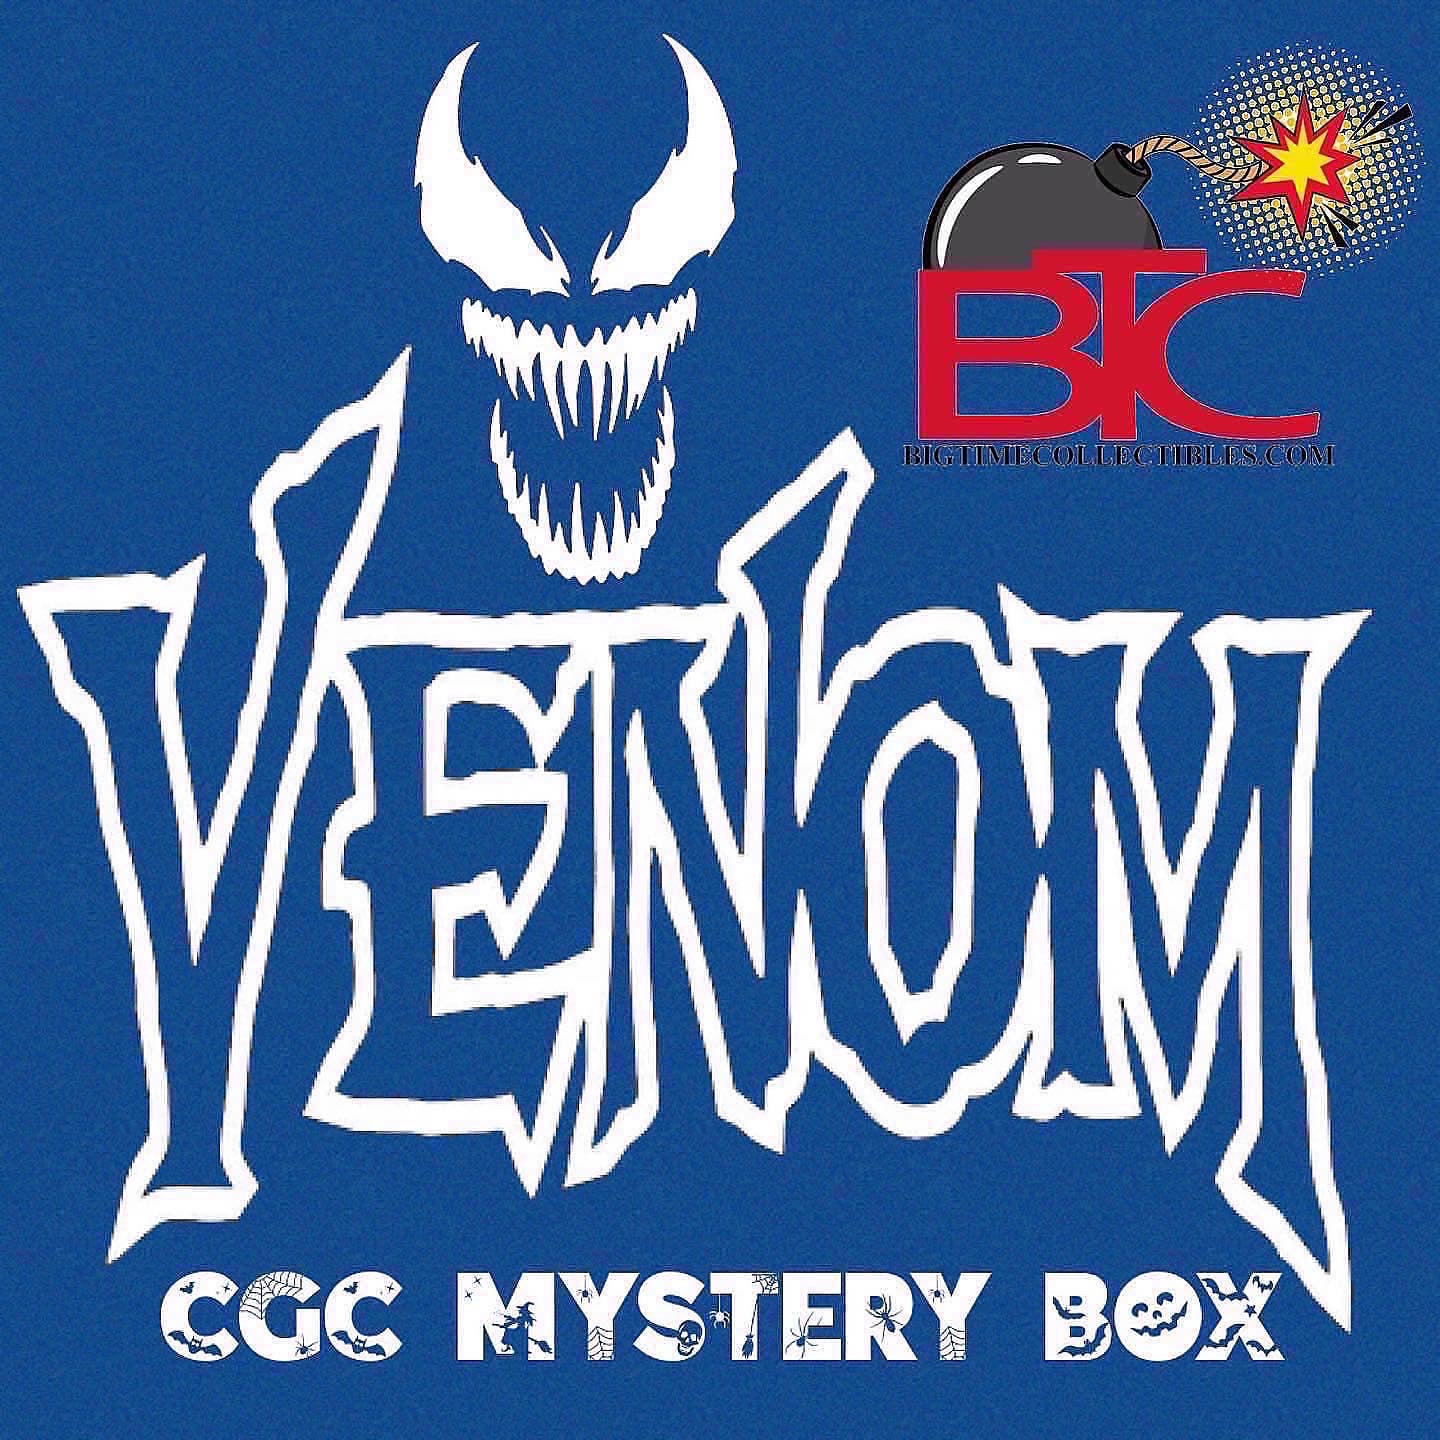 VENOM CGC MYSTERY BOX 2021 BLUE & YELLOW LABEL OPTIONS